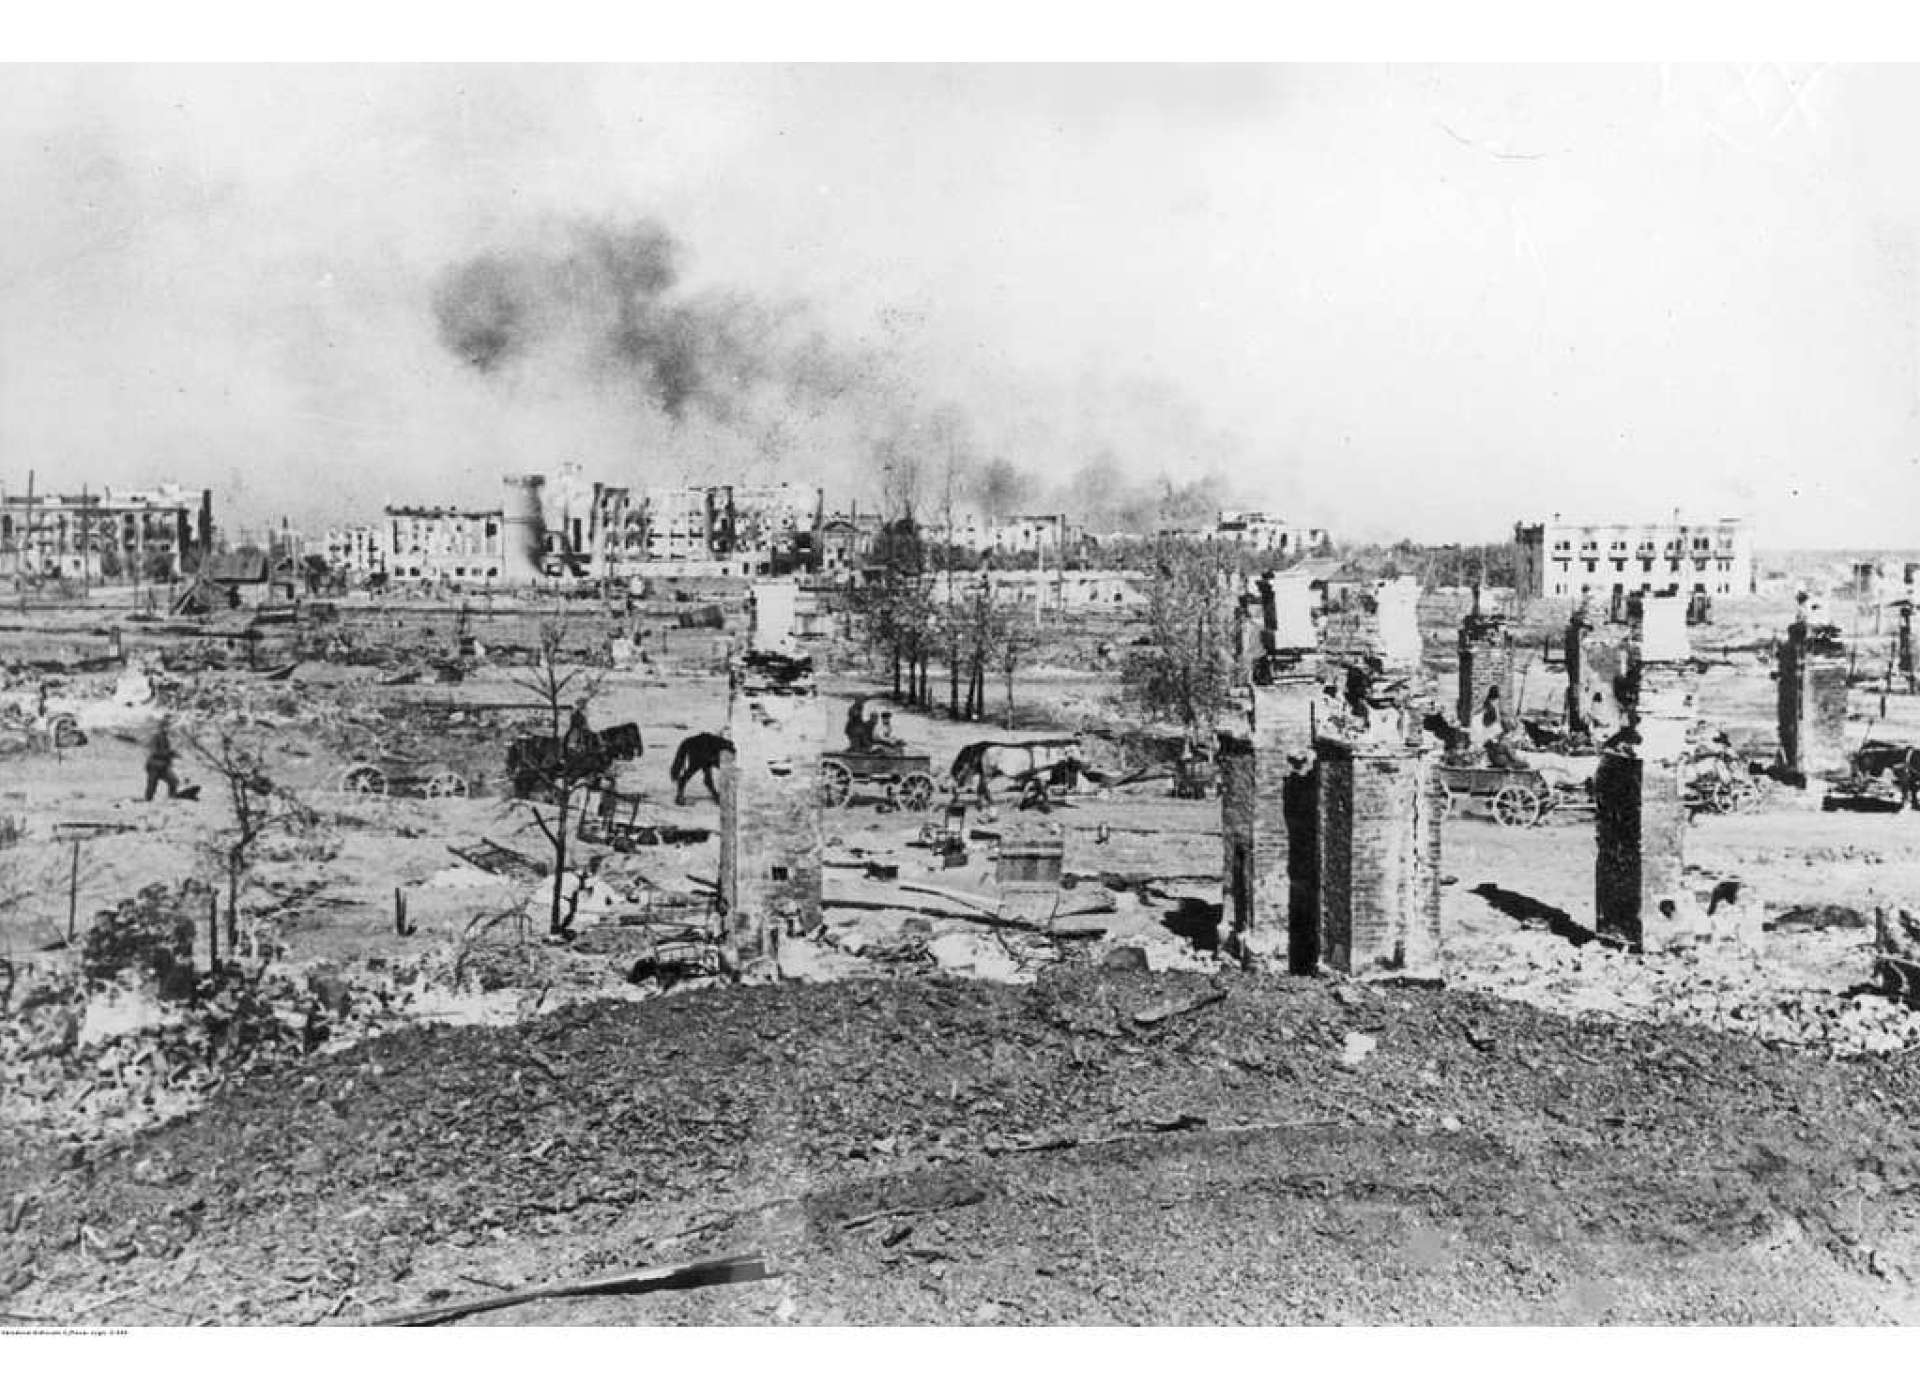 Destroyed Stalingrad, 1943. Source: PICRYL/Public domain